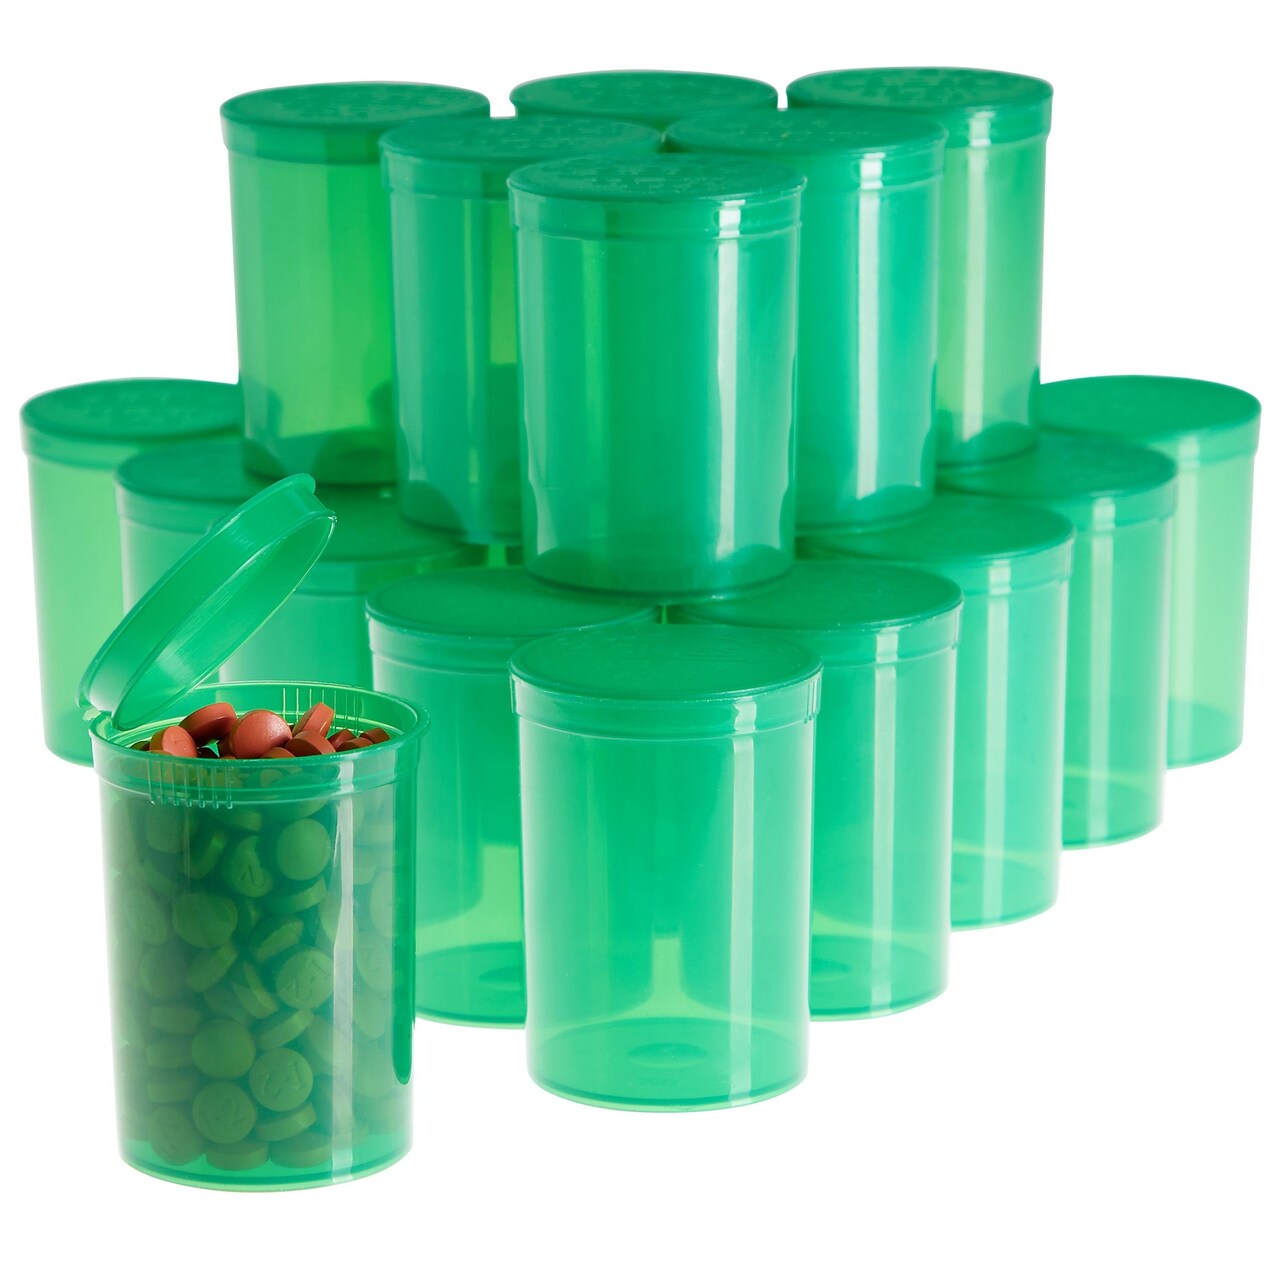 20 Pack Empty Pill Bottles with Pop Top Caps, 30 Dram Medicine